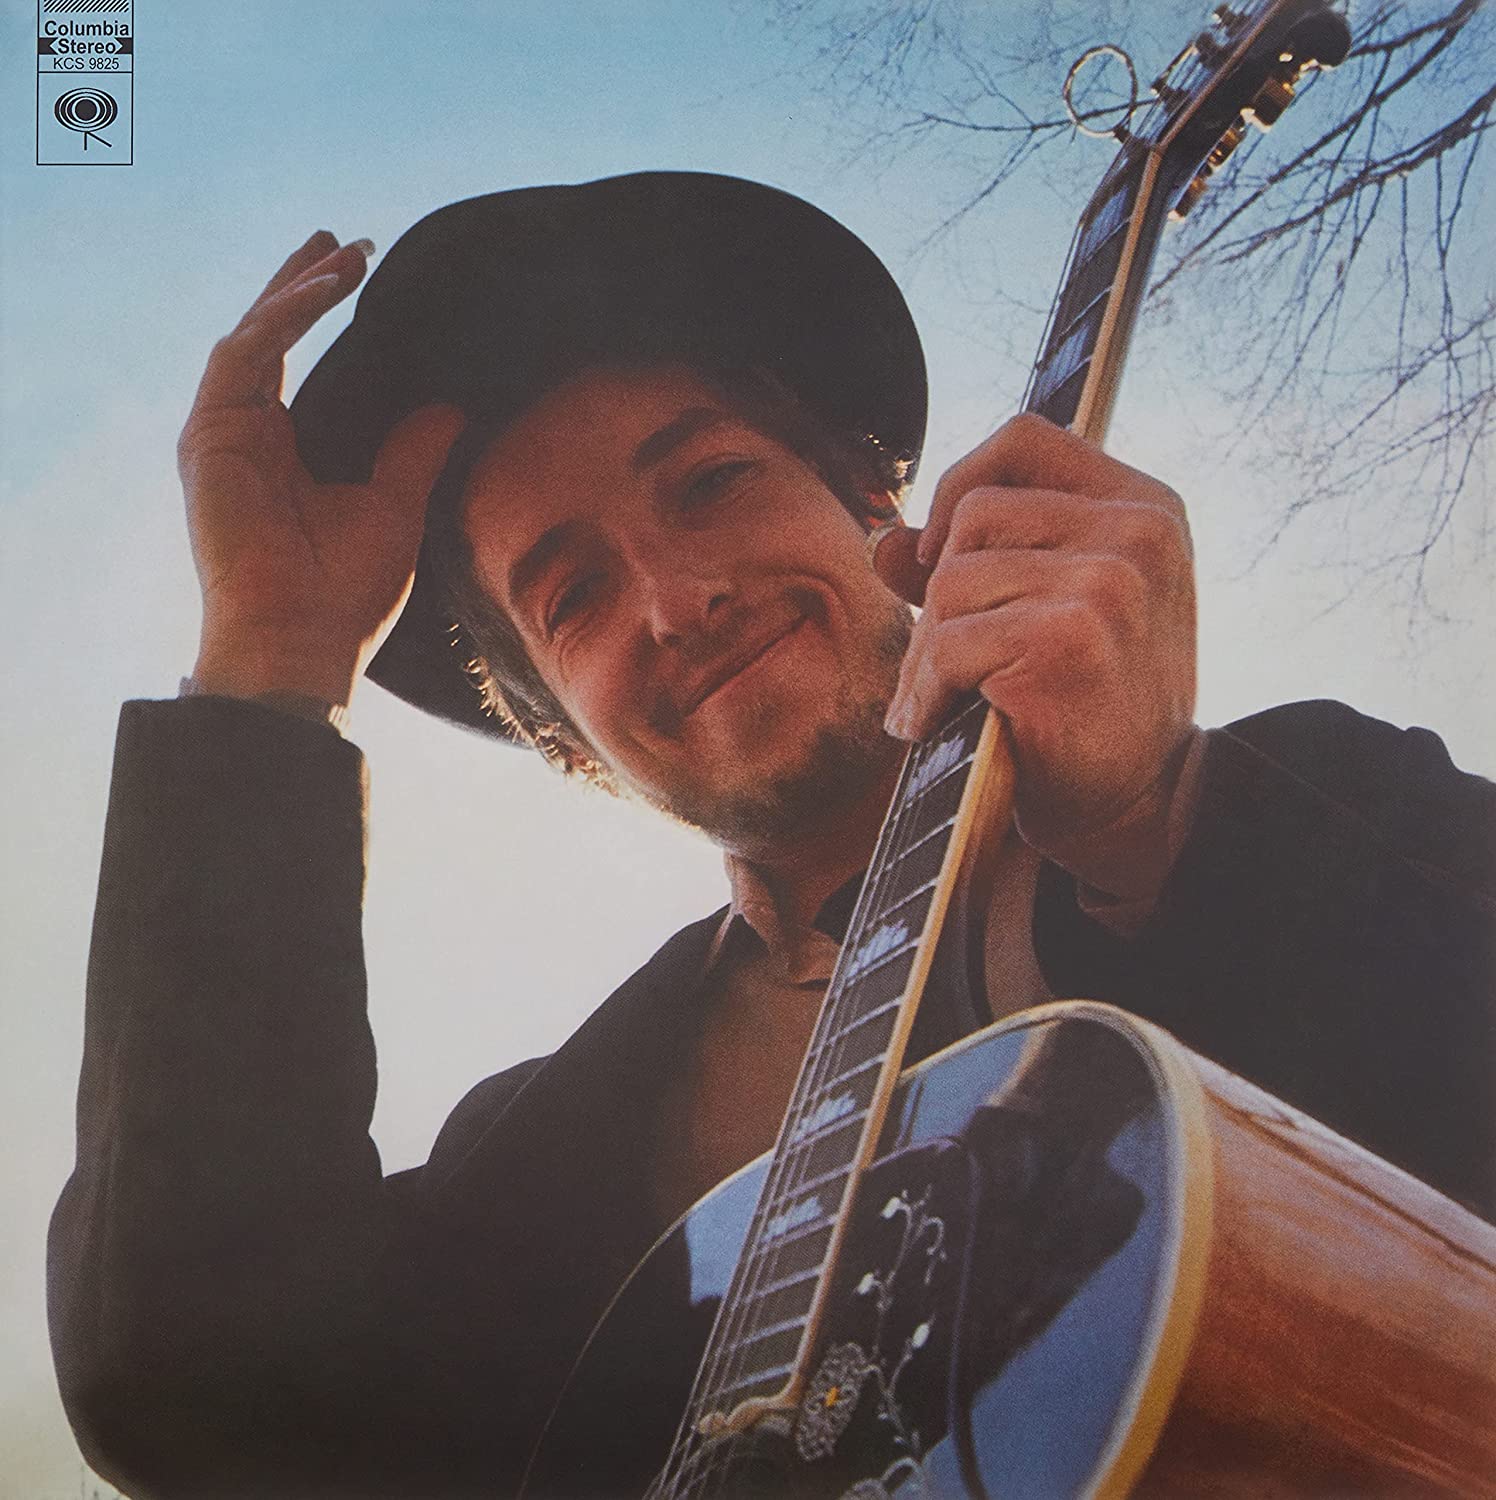 Bob Dylan - Nashville Skyline (Vinyl LP)